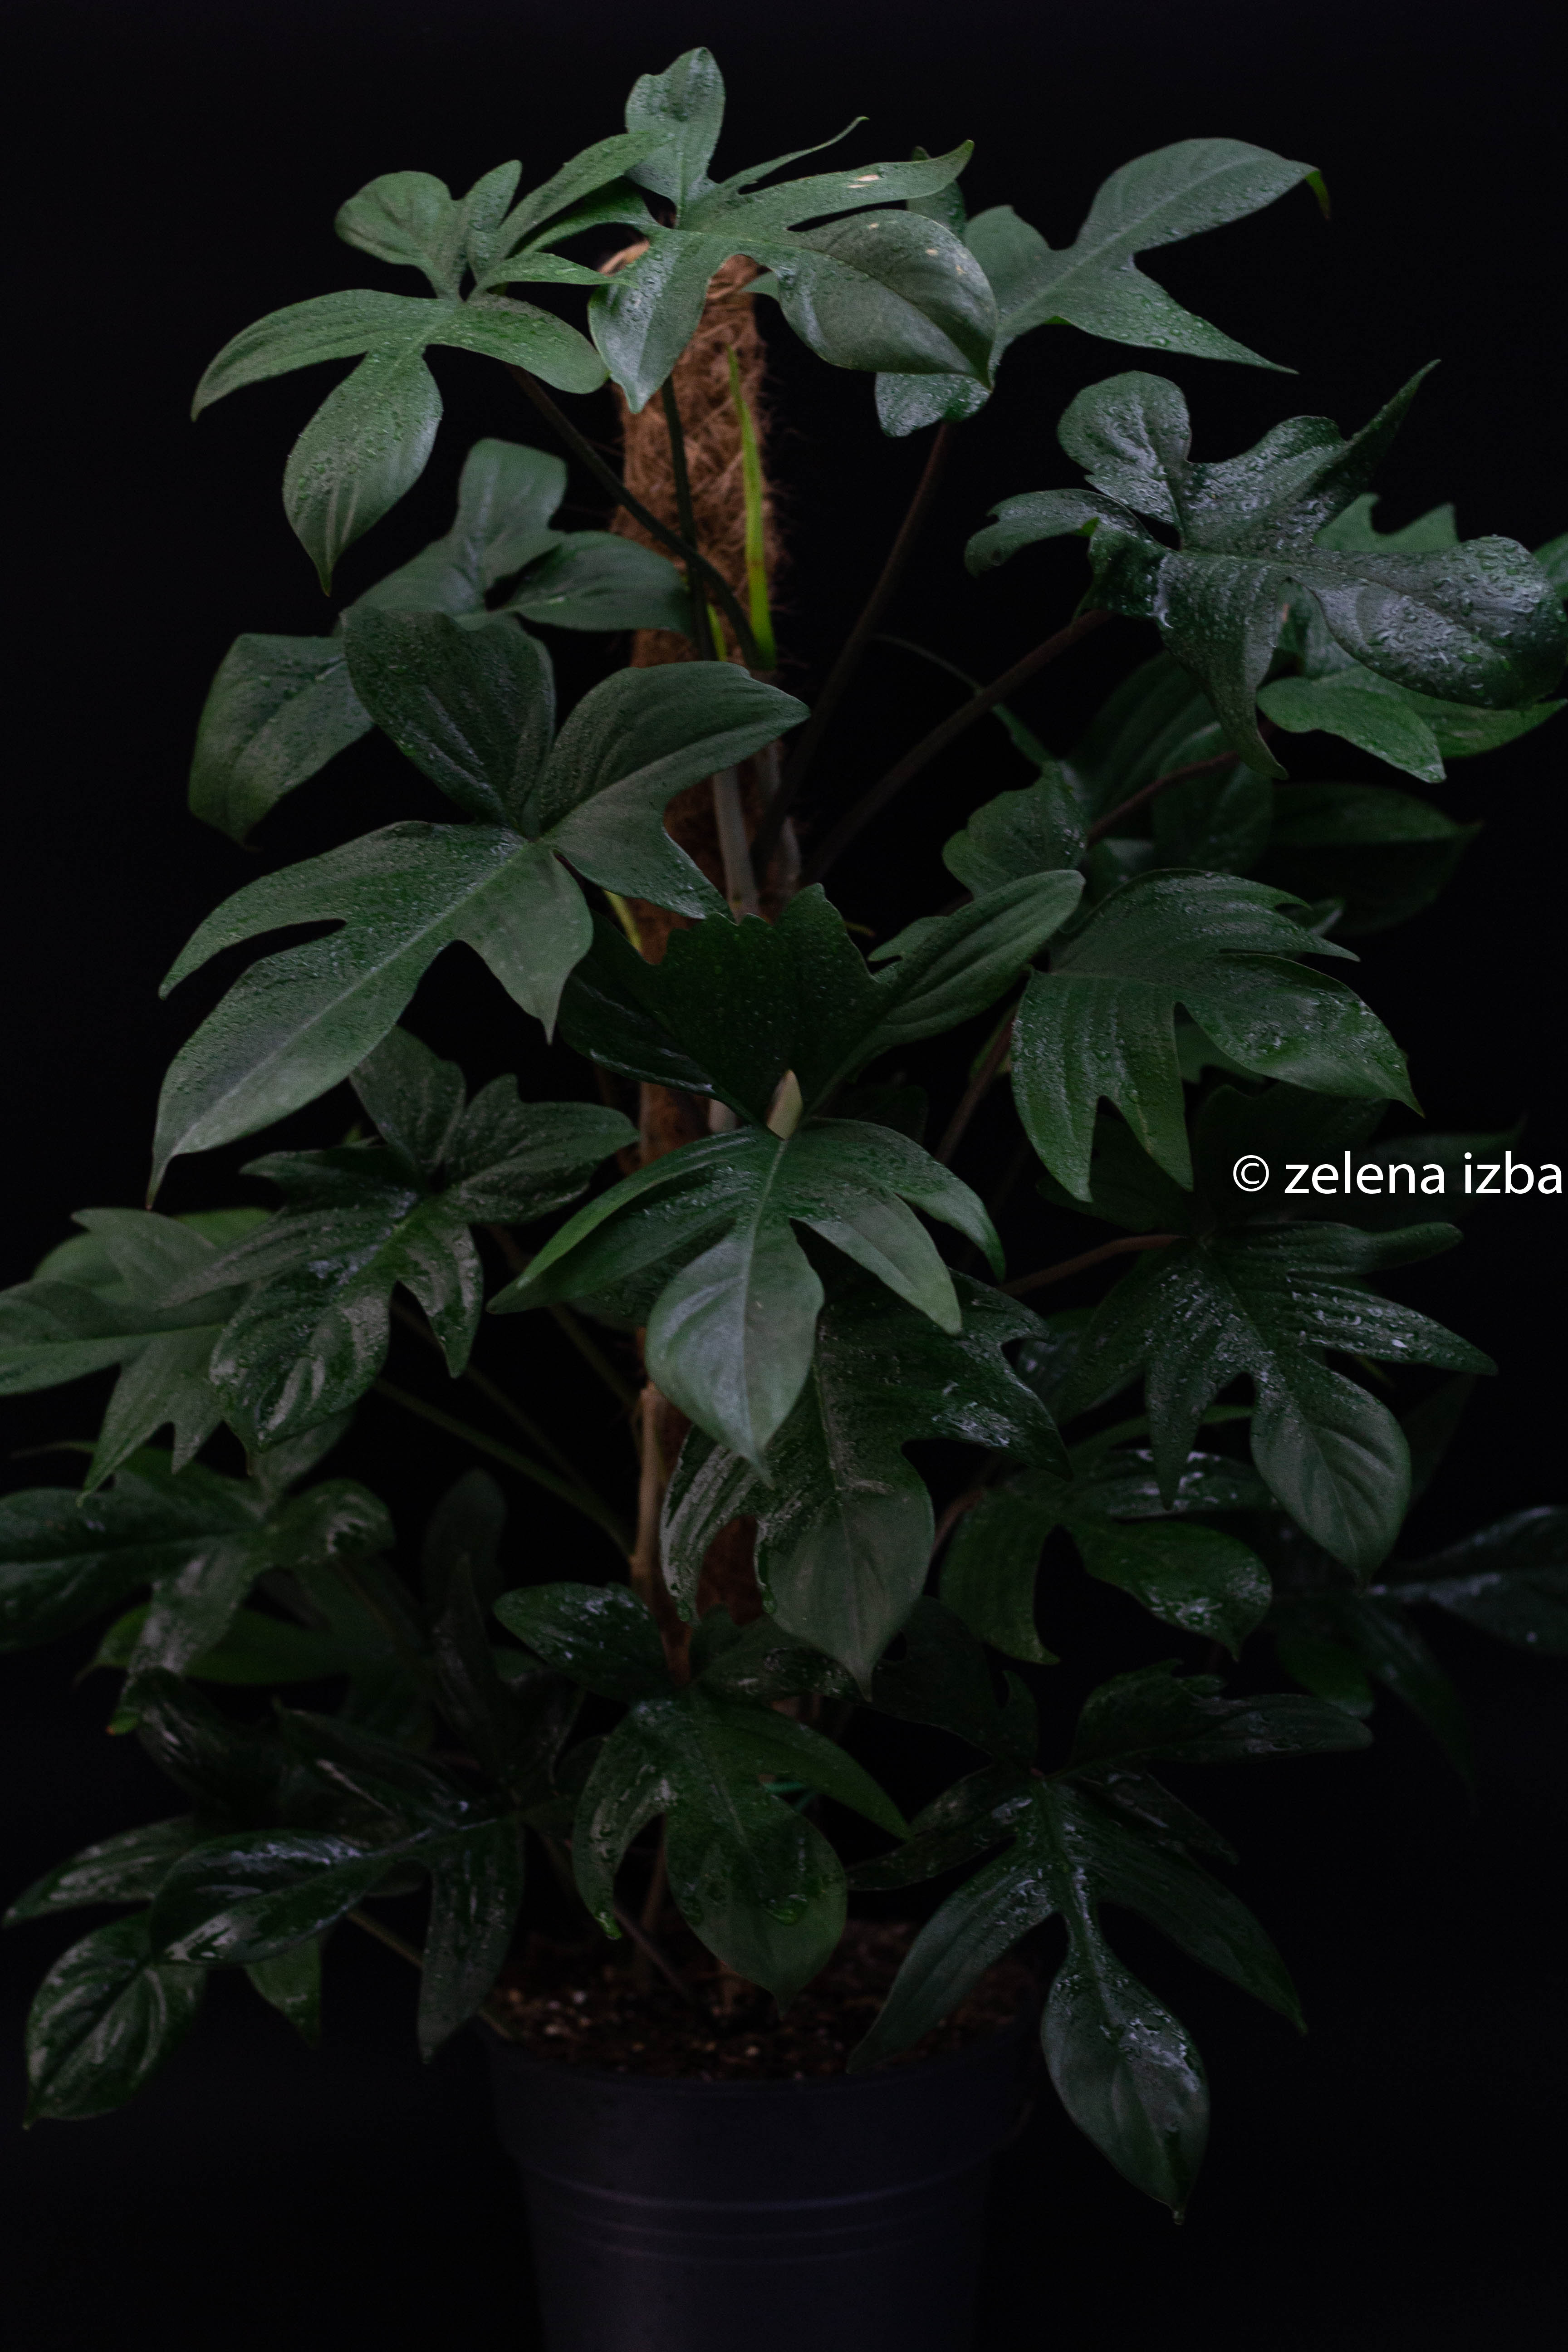 Philodendron pedatum "XL"